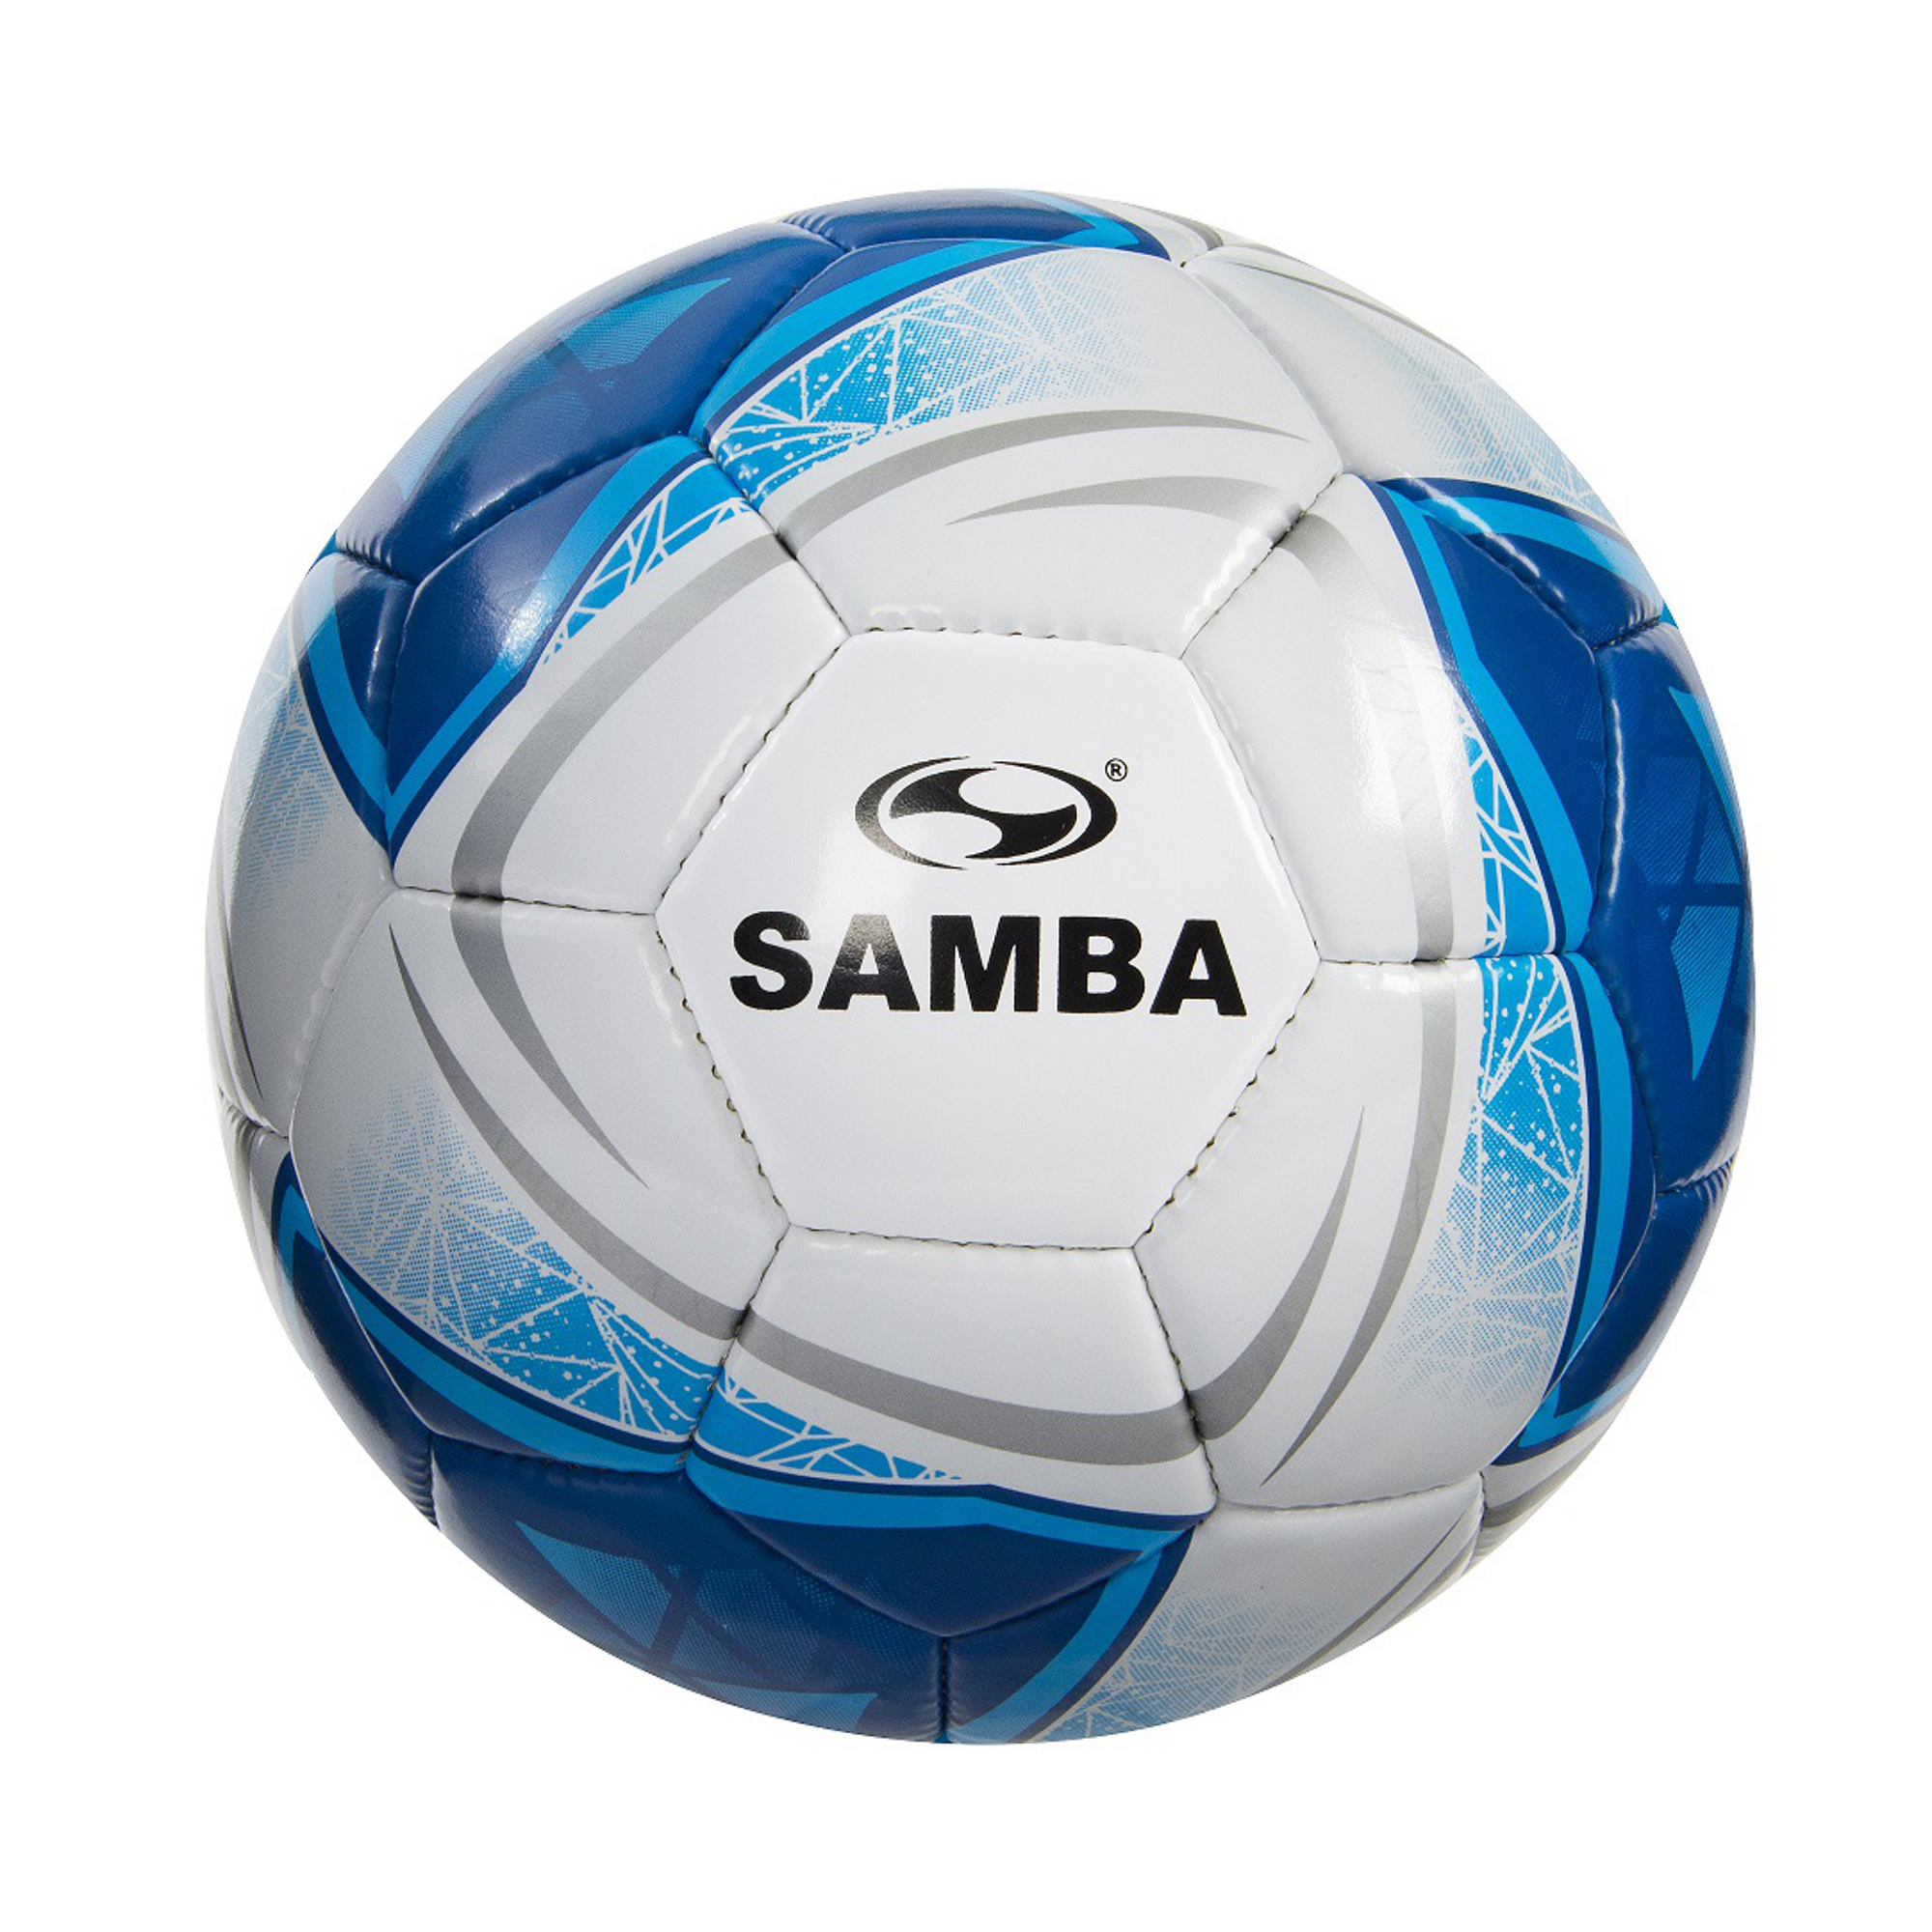 Samba Edu Football Wht Blu Slvr S4